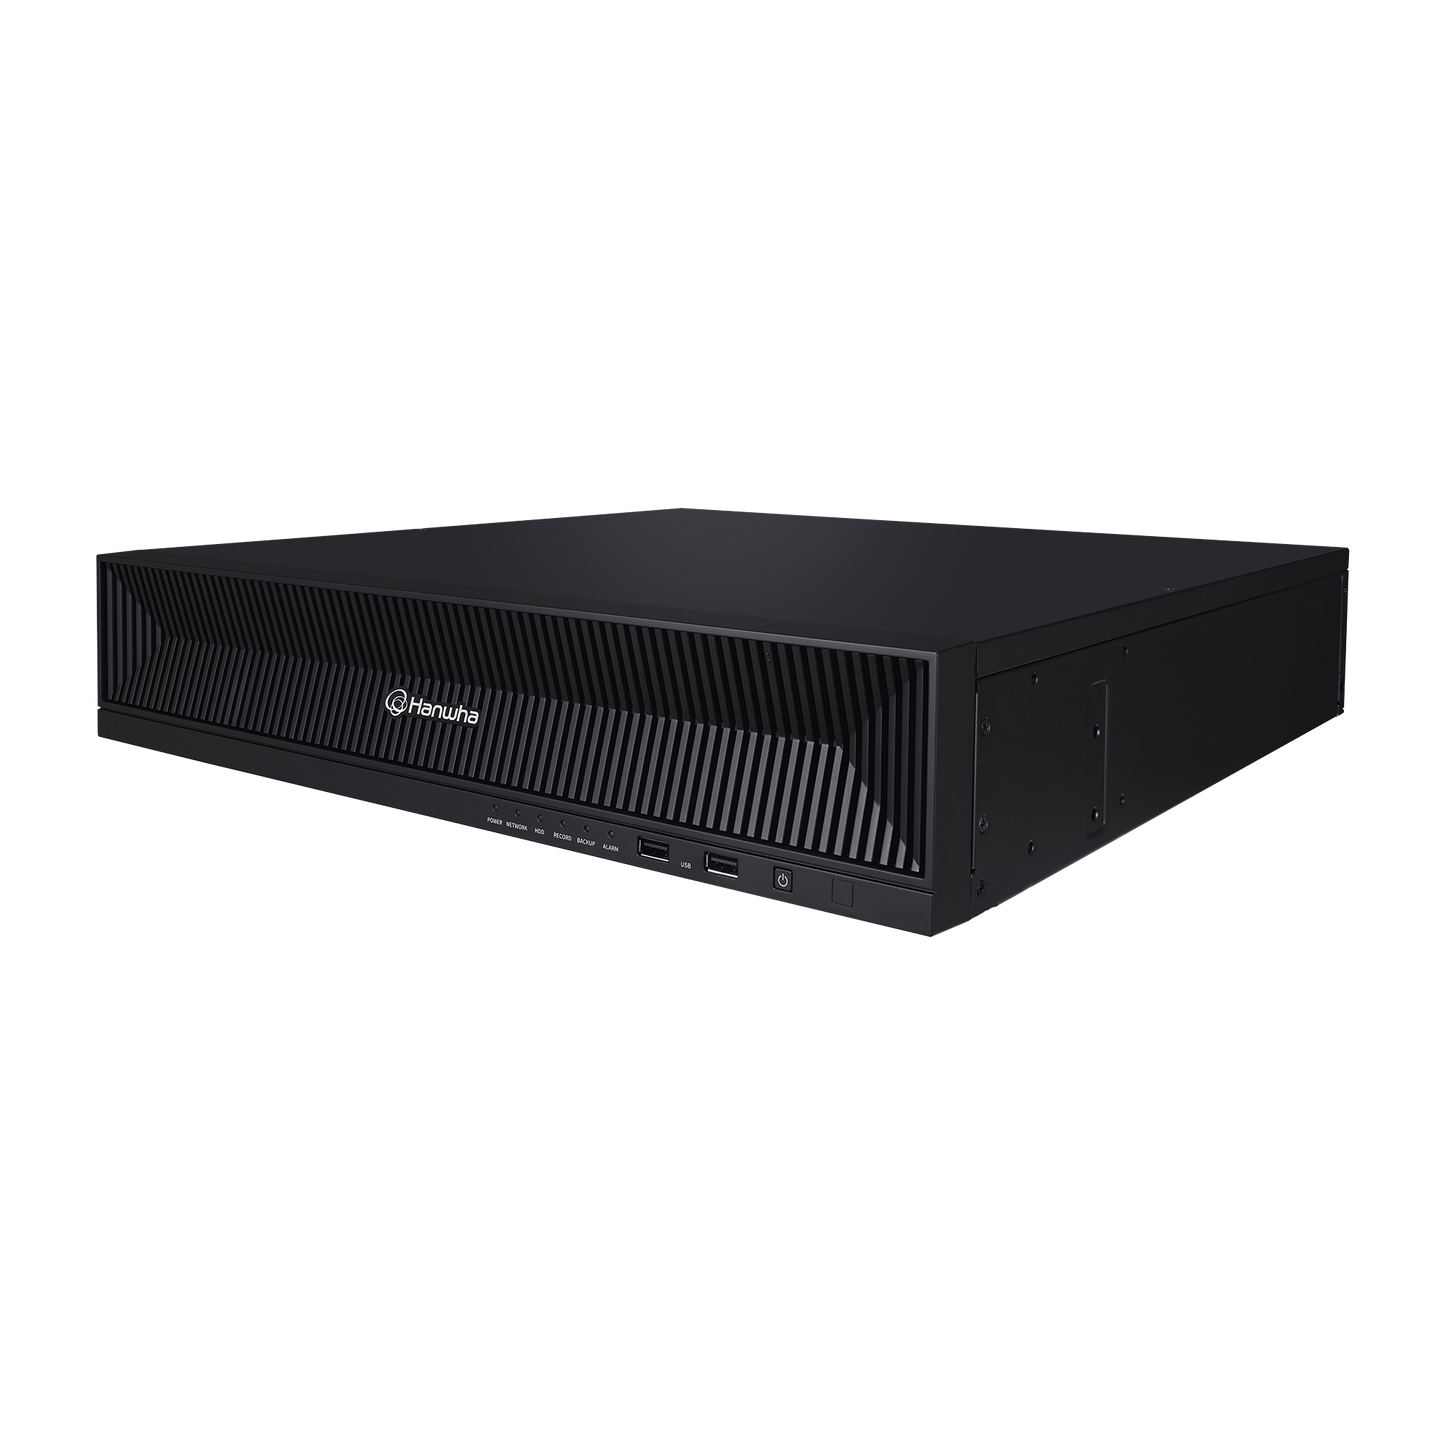 NVR 32 Megapixel (8K) / 32 Canales IP / Soporta 8 Discos Duros / H.265 & Wisestream / Wisenet P2P / ONVIF / Compatible con Cámaras IA / Salida HDMI en 4K